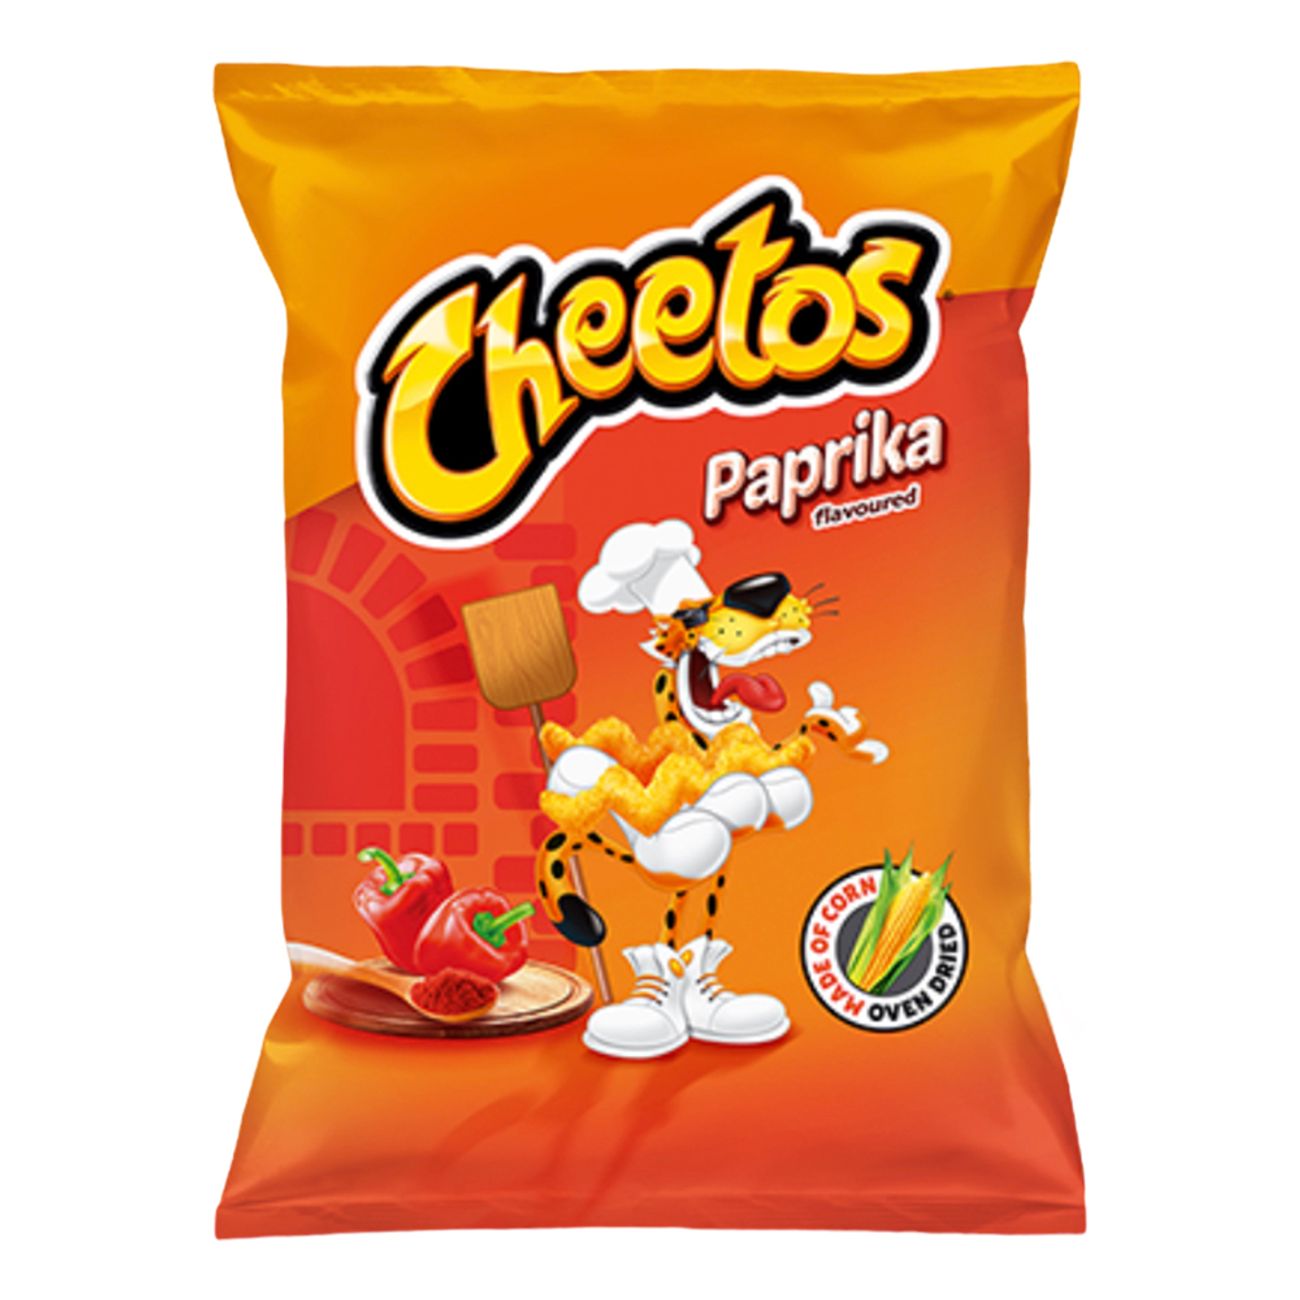 cheetos-paprika-99823-1